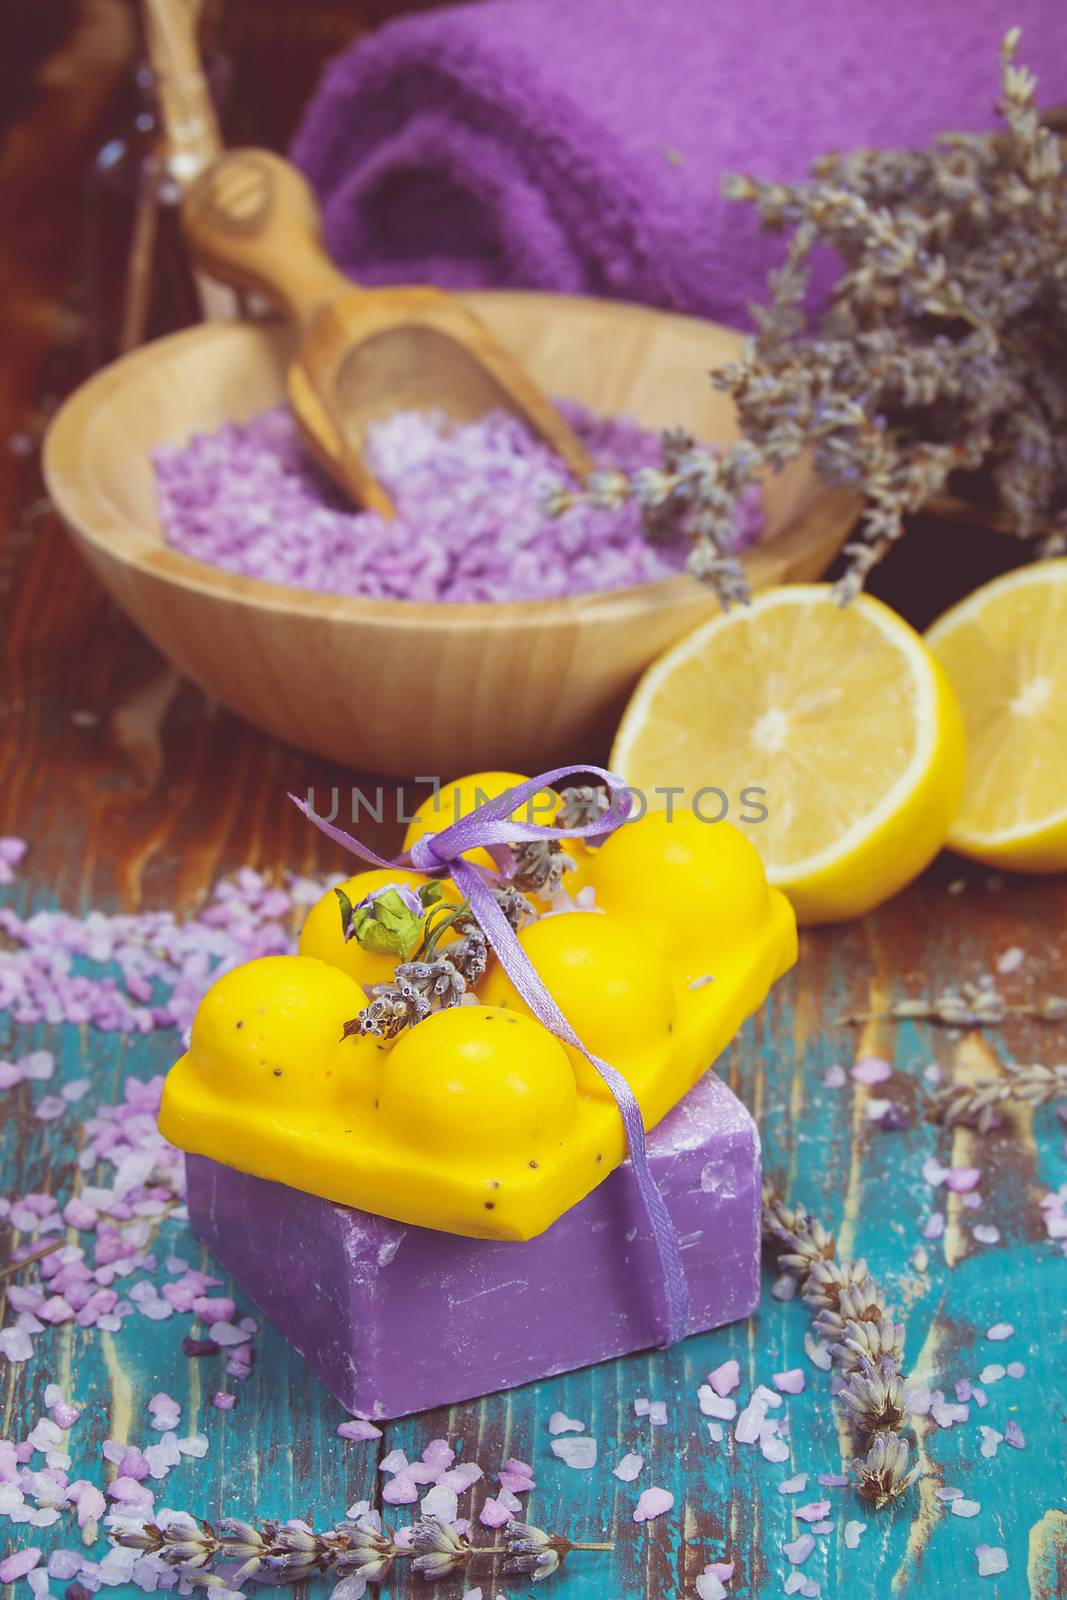 Lavender and lemon aromatherapy by Slast20